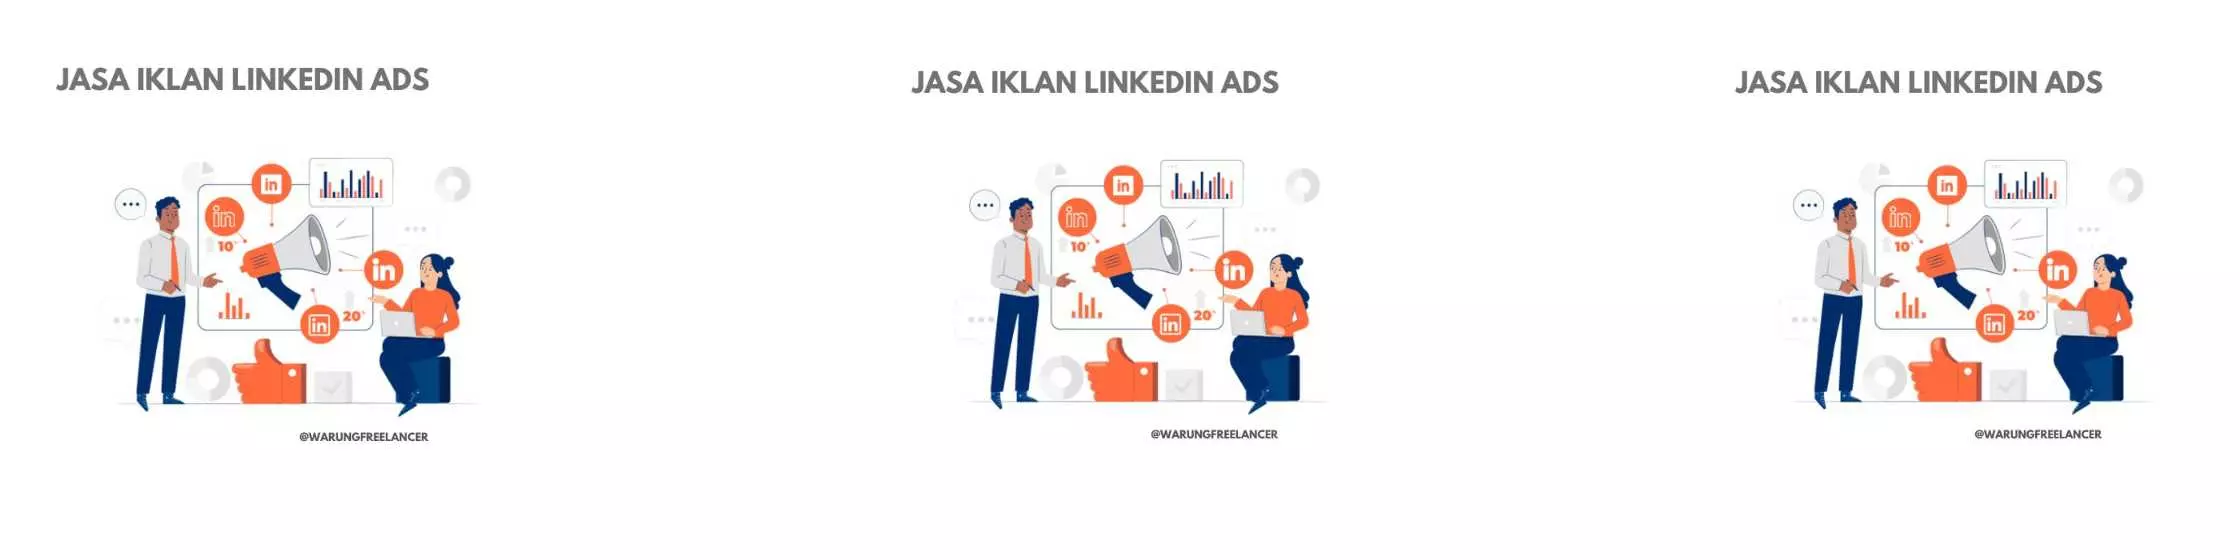 Jasa Iklan LinkedIn Ads